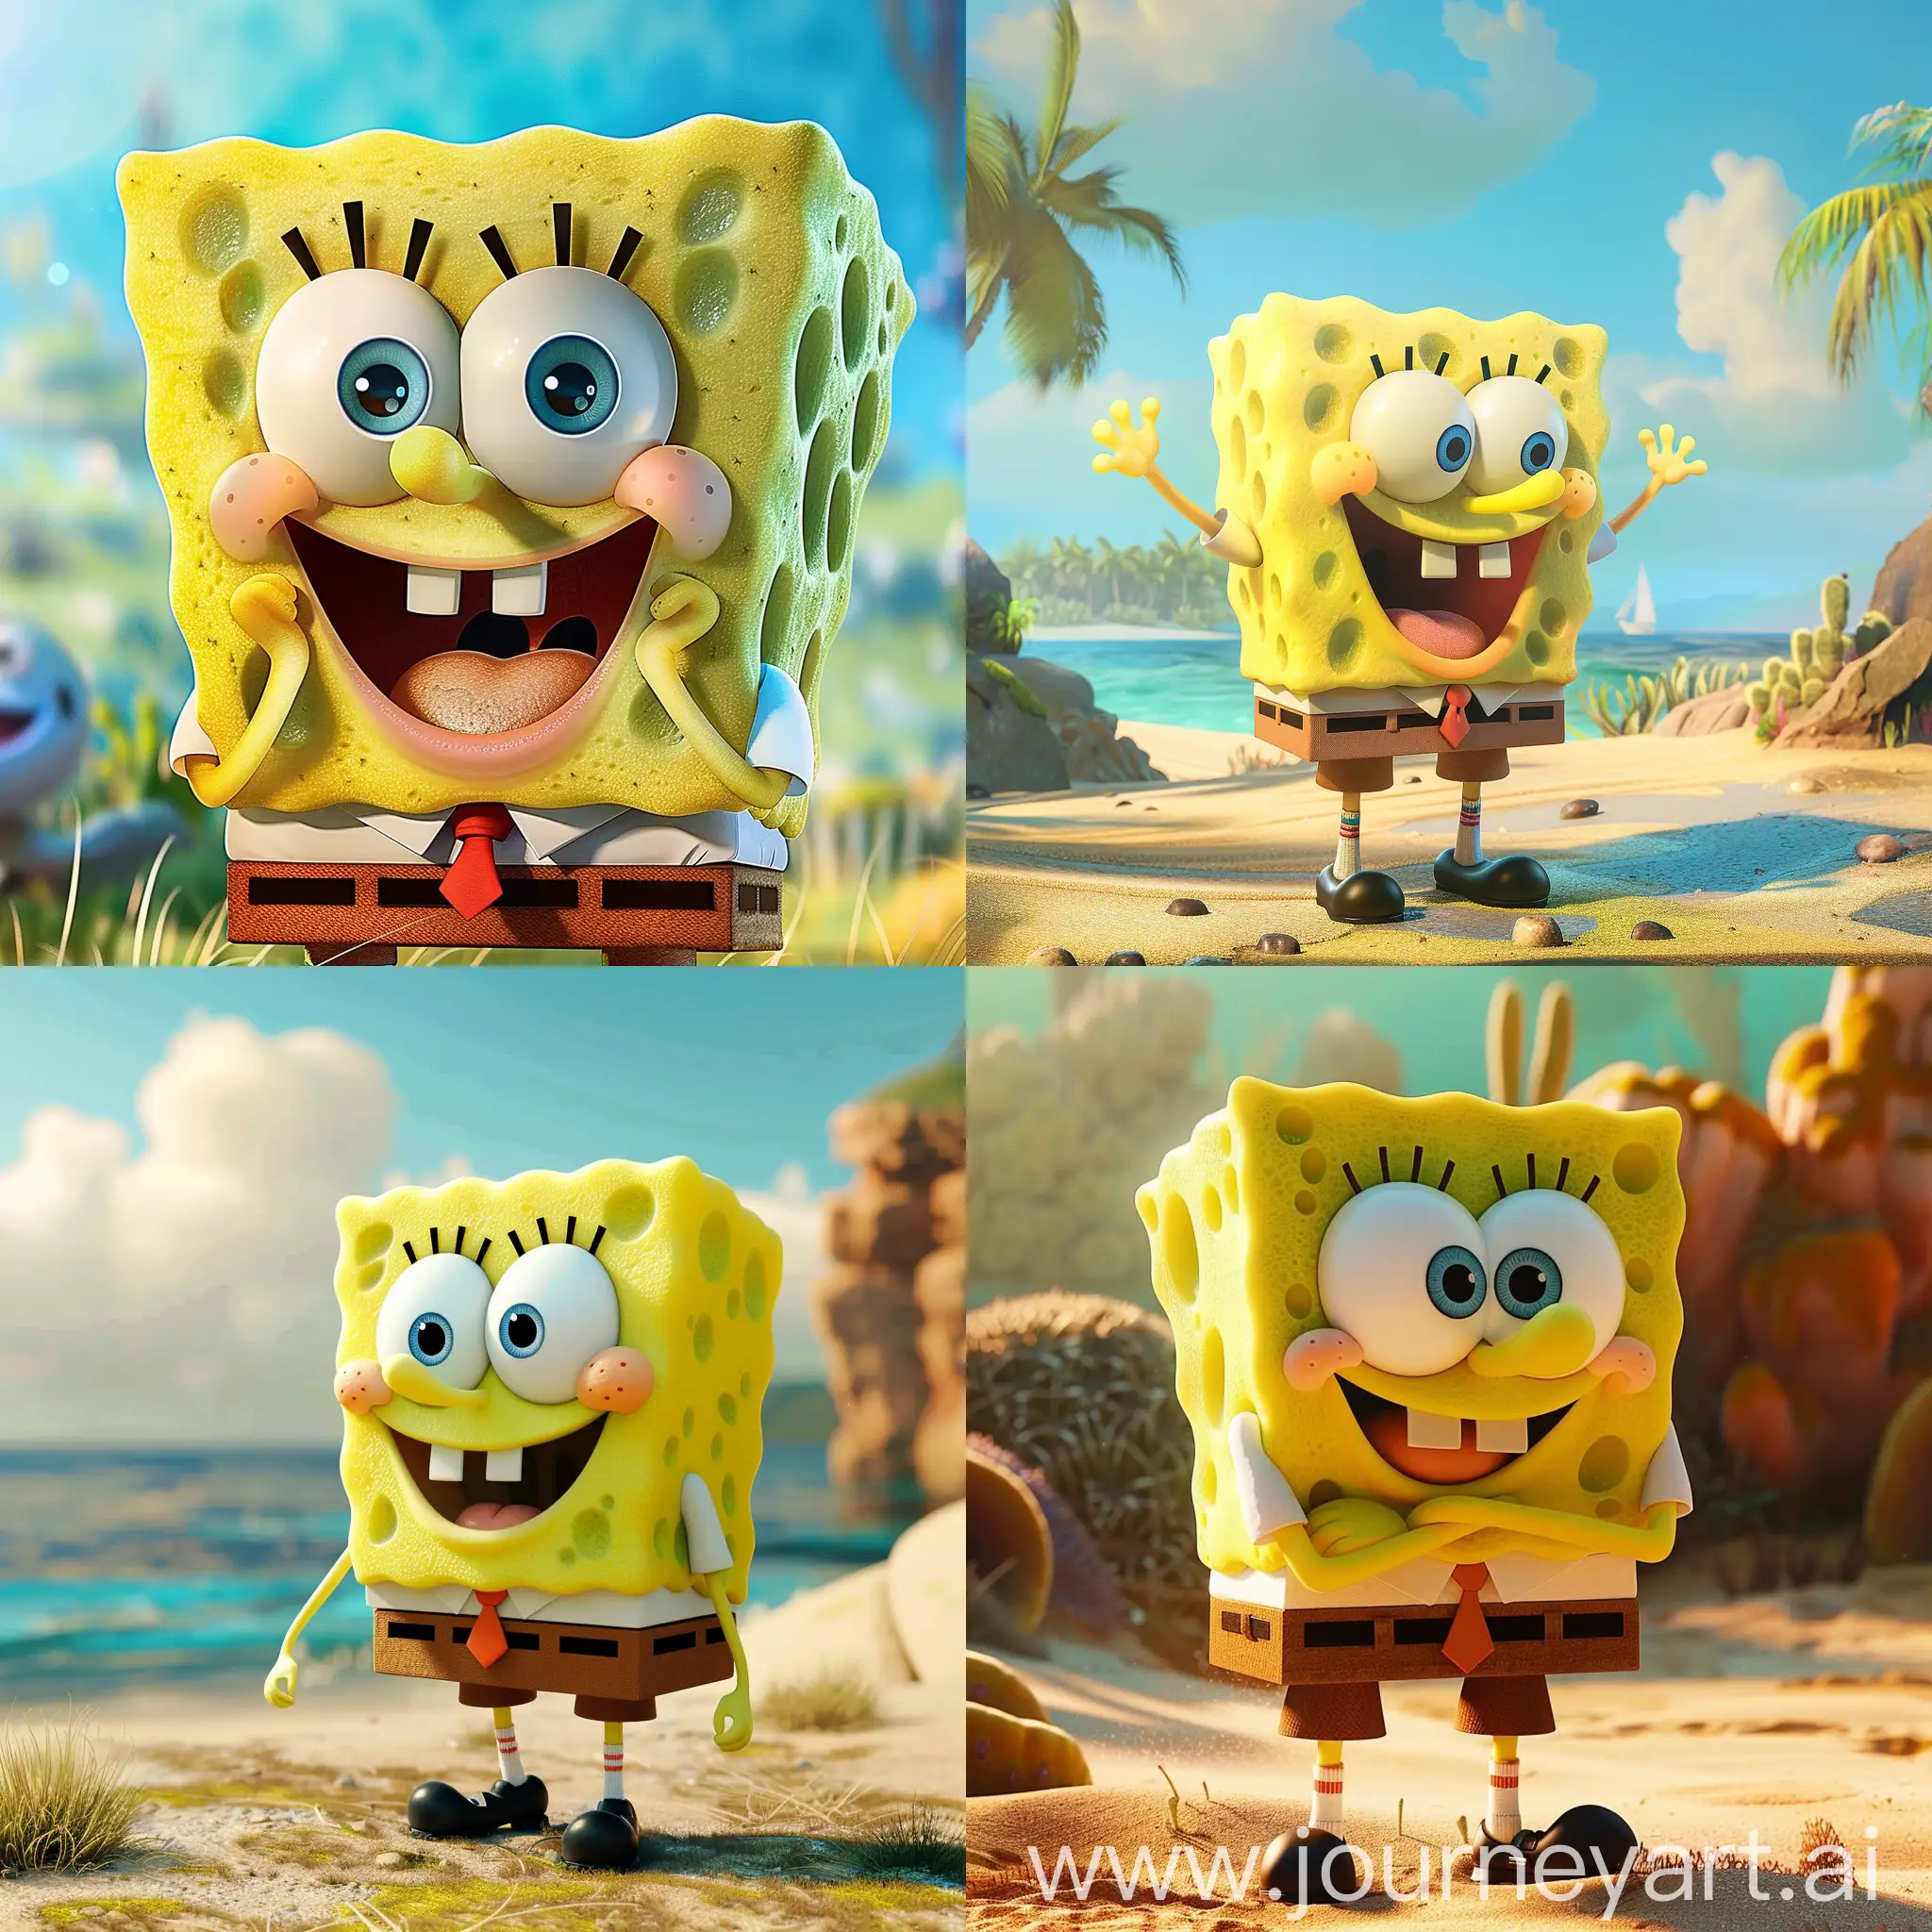 SpongeBob-SquarePants-Beloved-Cartoon-Character-in-Vibrant-Animation-Style